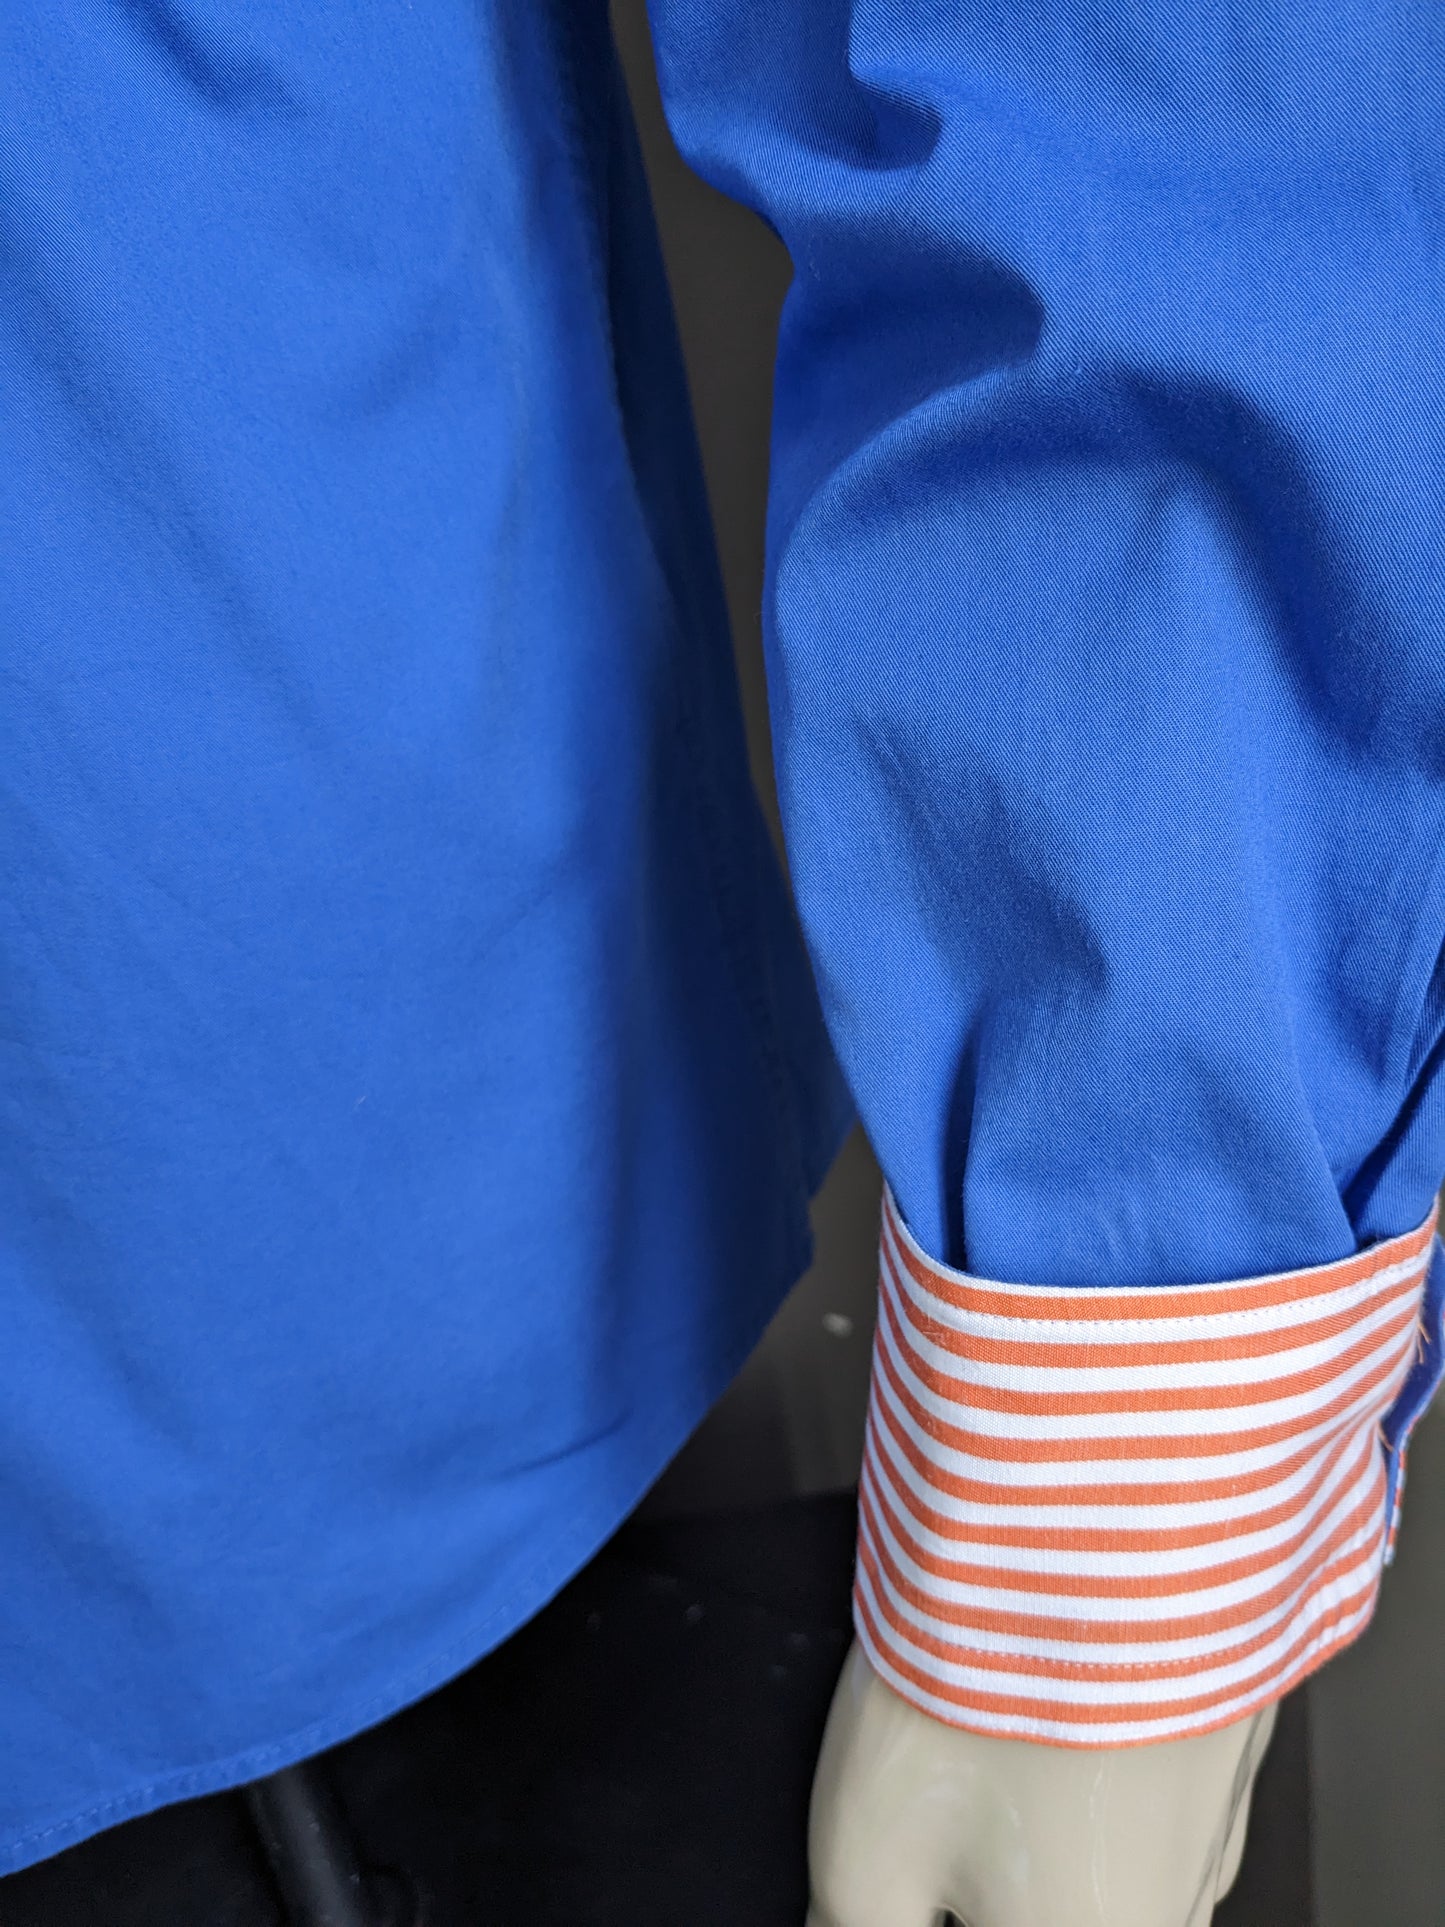 WAM Denim overhemd met dubbele kraag. Blauw Oranje gekleurd. Maat XL.